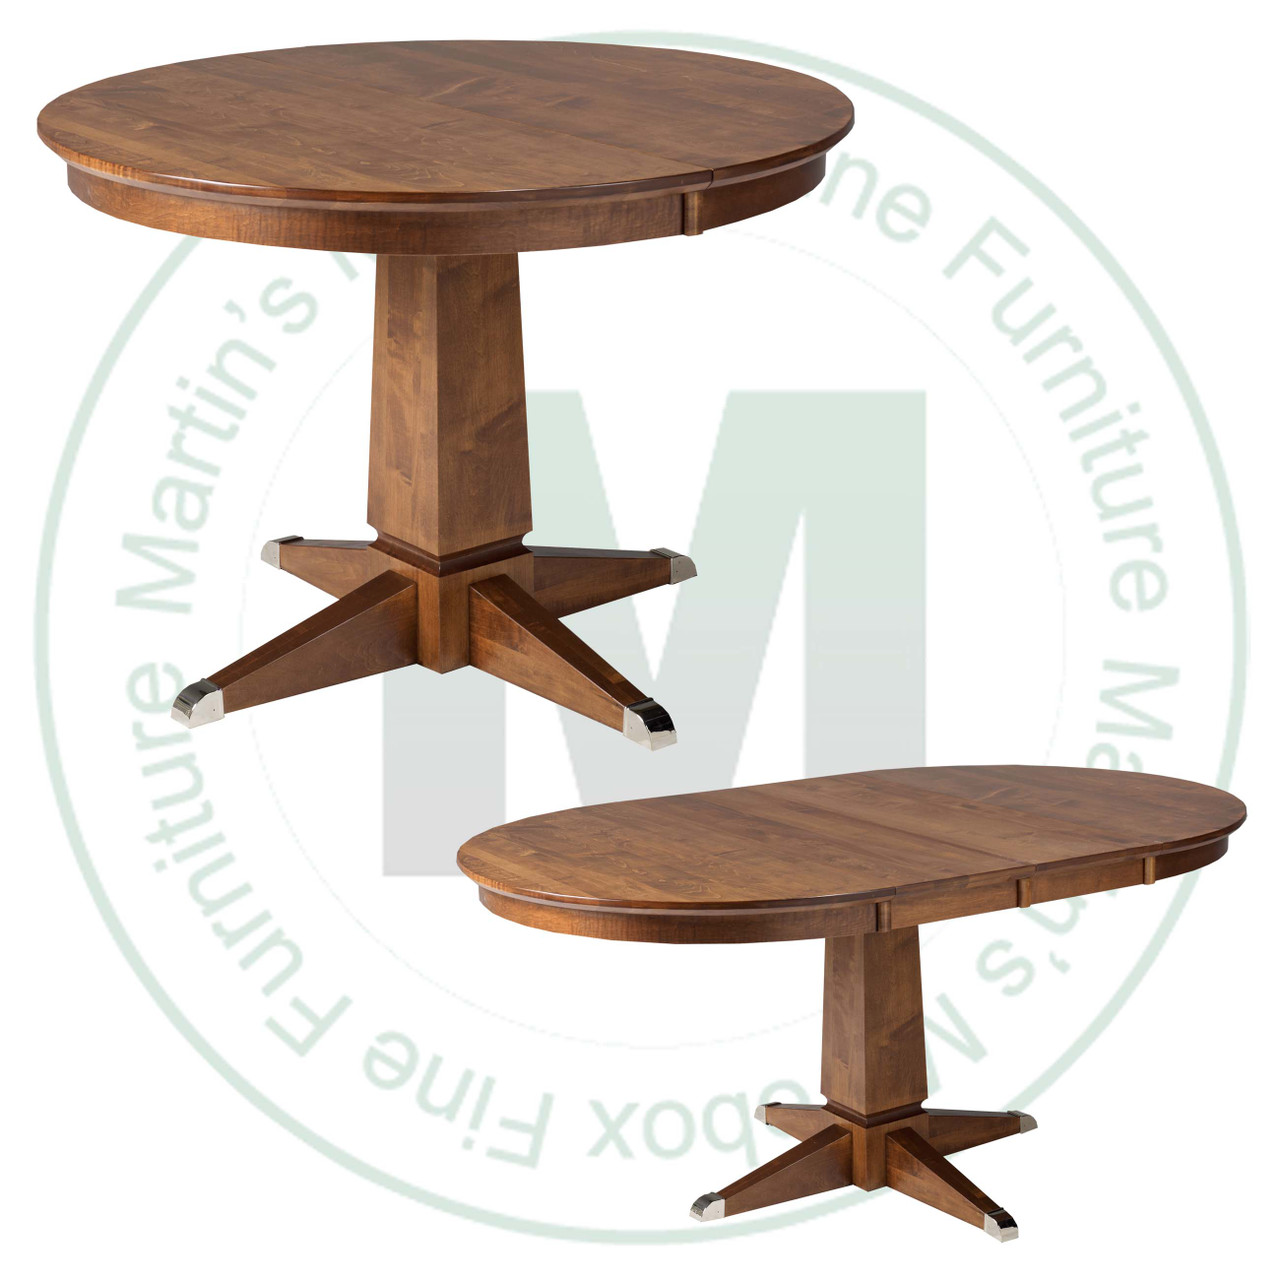 Oak Danish Single Pedestal Table 48''D x 48''W x 30''H With 1 - 12'' Leaf